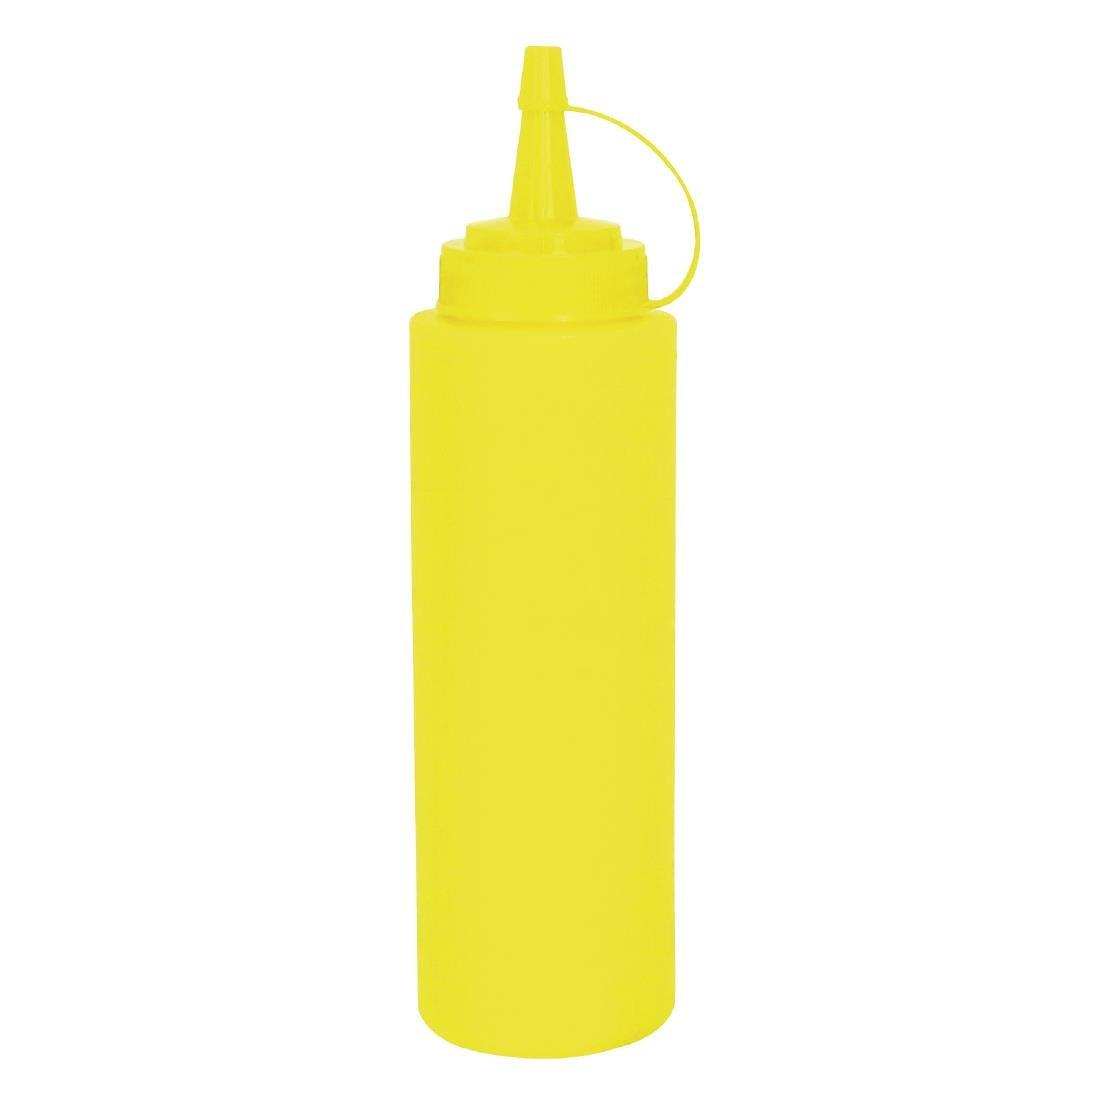 Vogue Yellow Squeeze Sauce Bottle 994ml - HospoStore